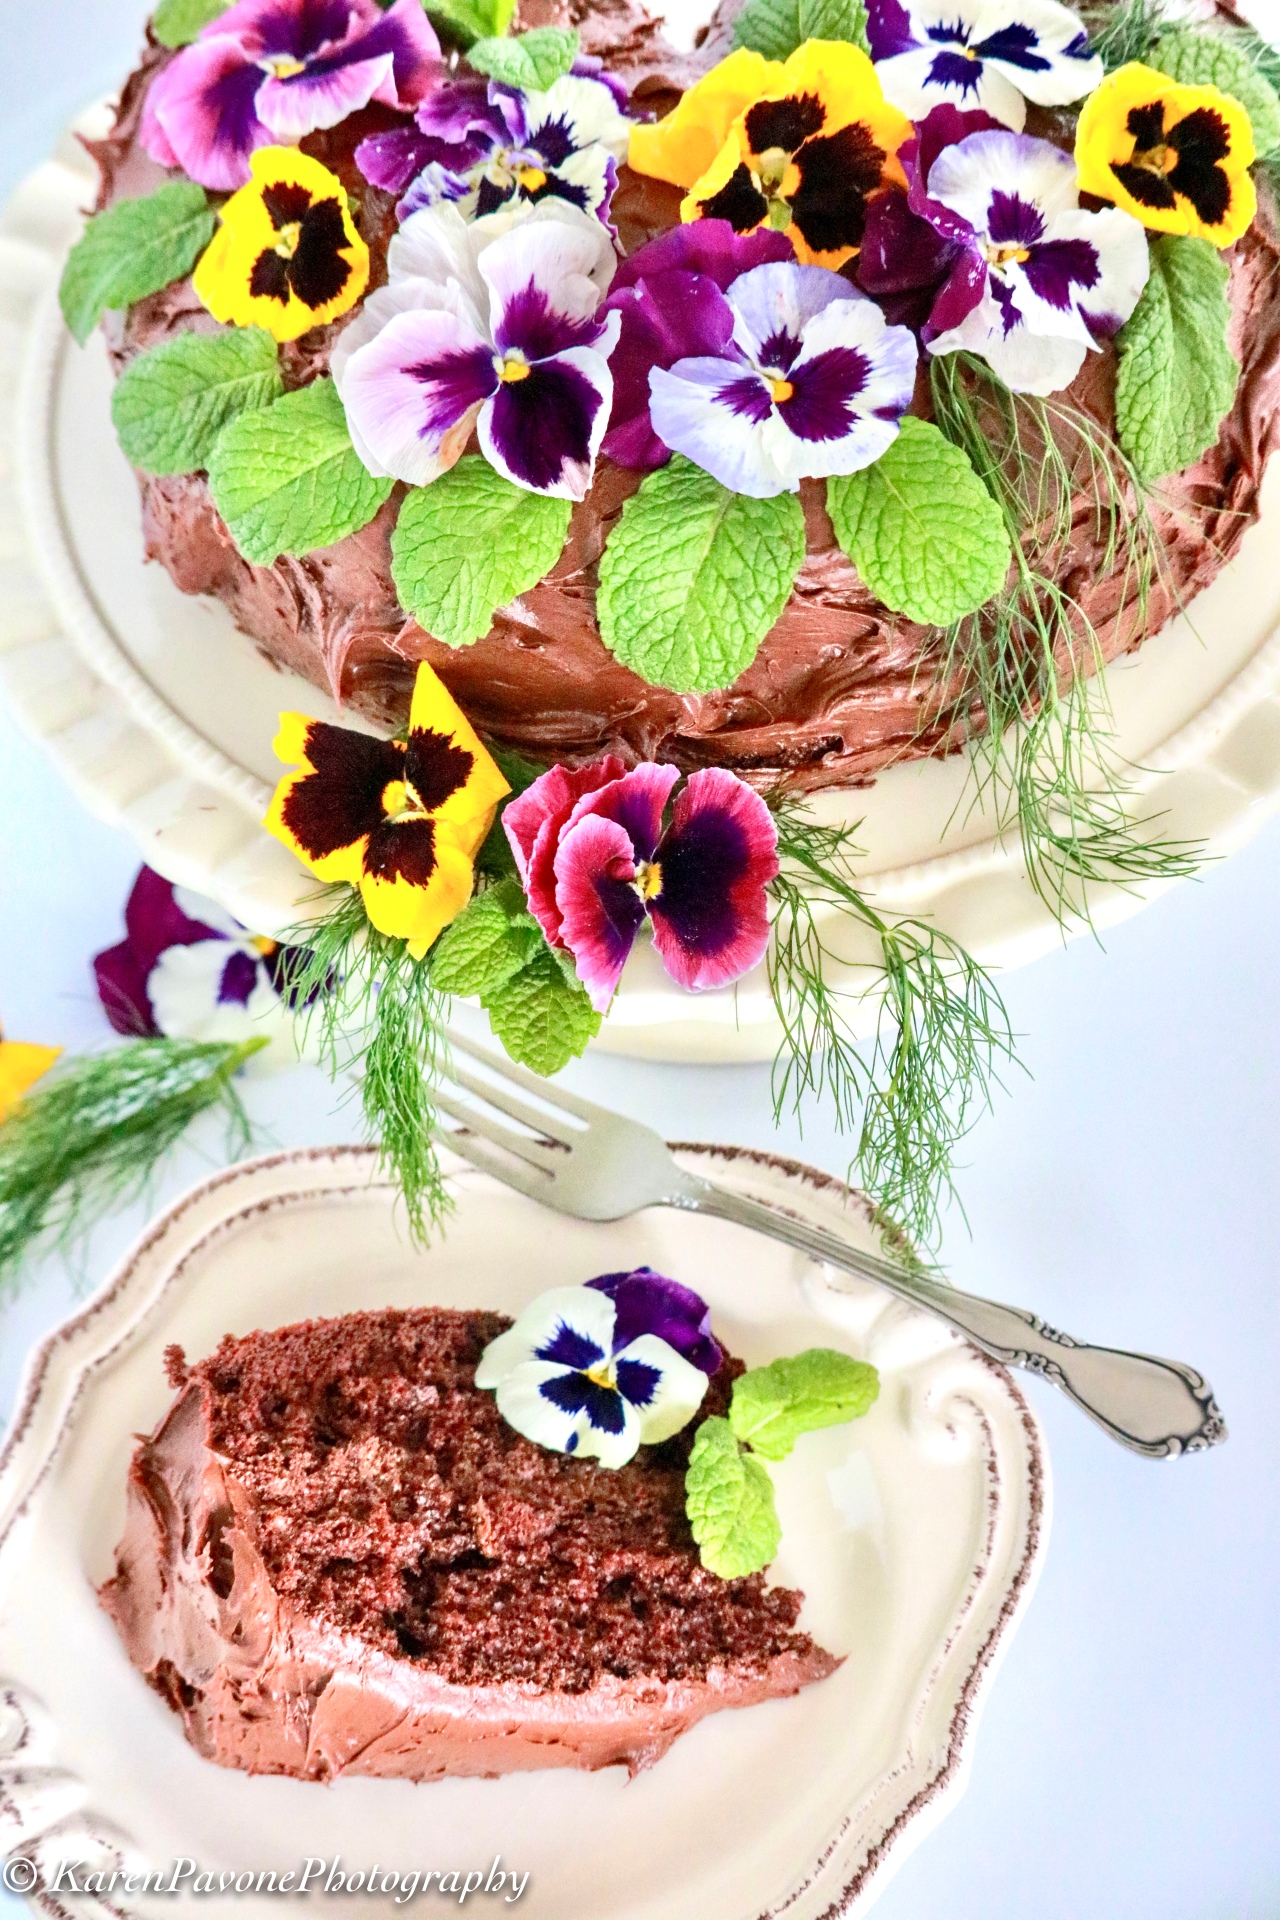 Homemade Chocolate Decadence Cake with Edible Botanicals